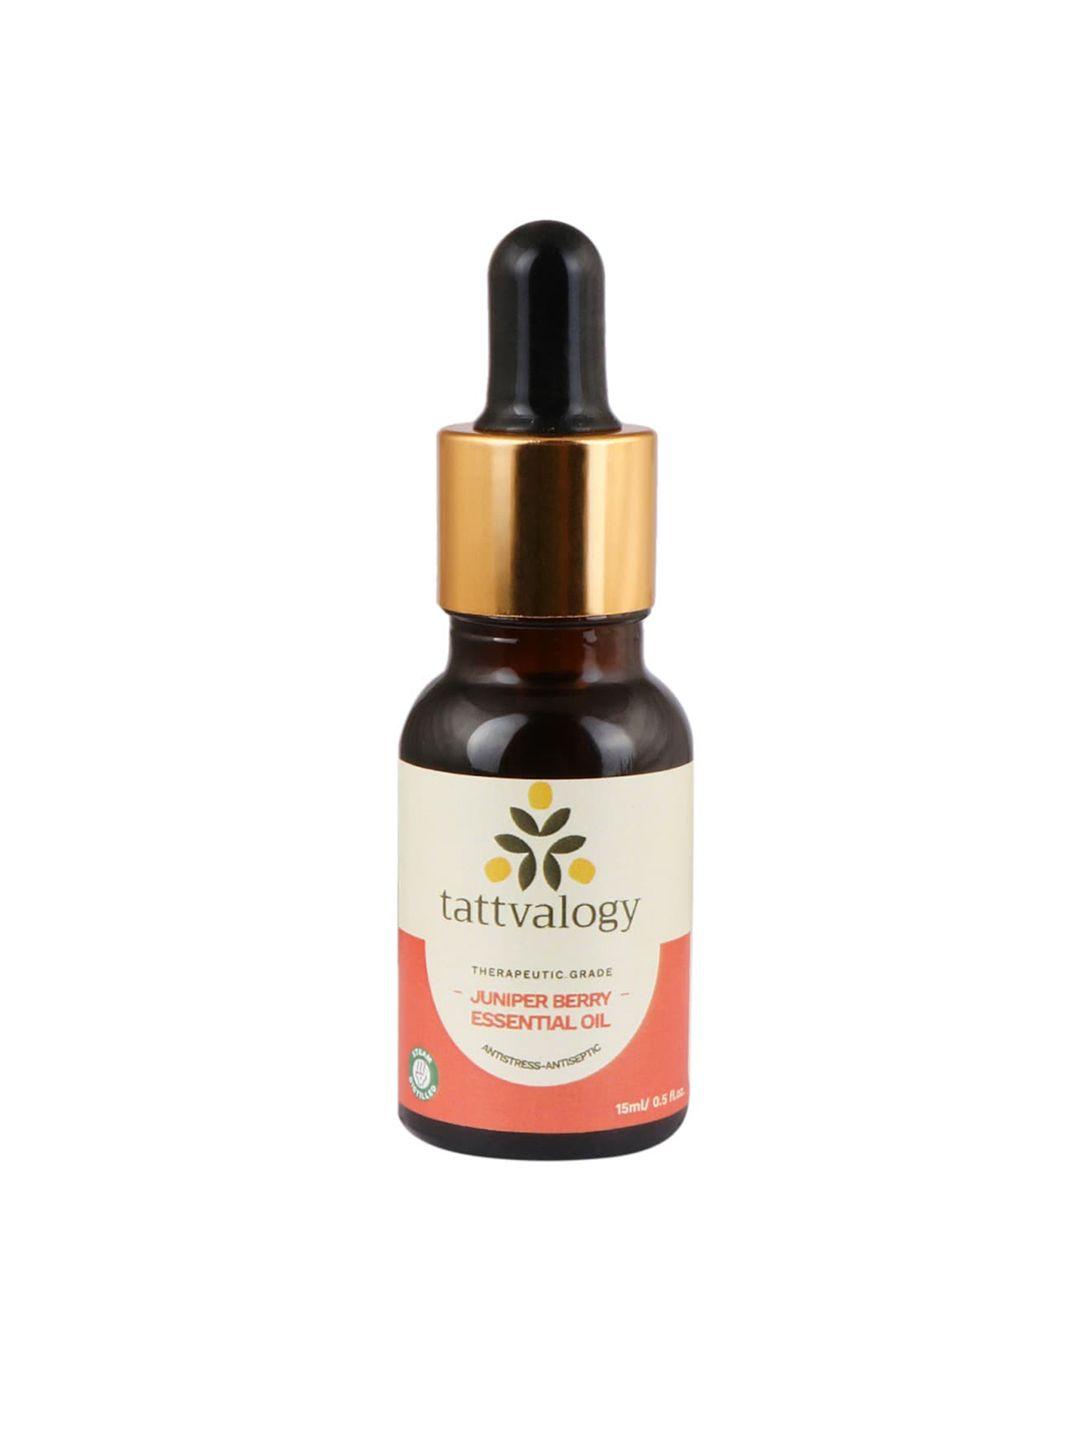 tattvalogy therapeutic grade juniper berry essential oil - 15 ml